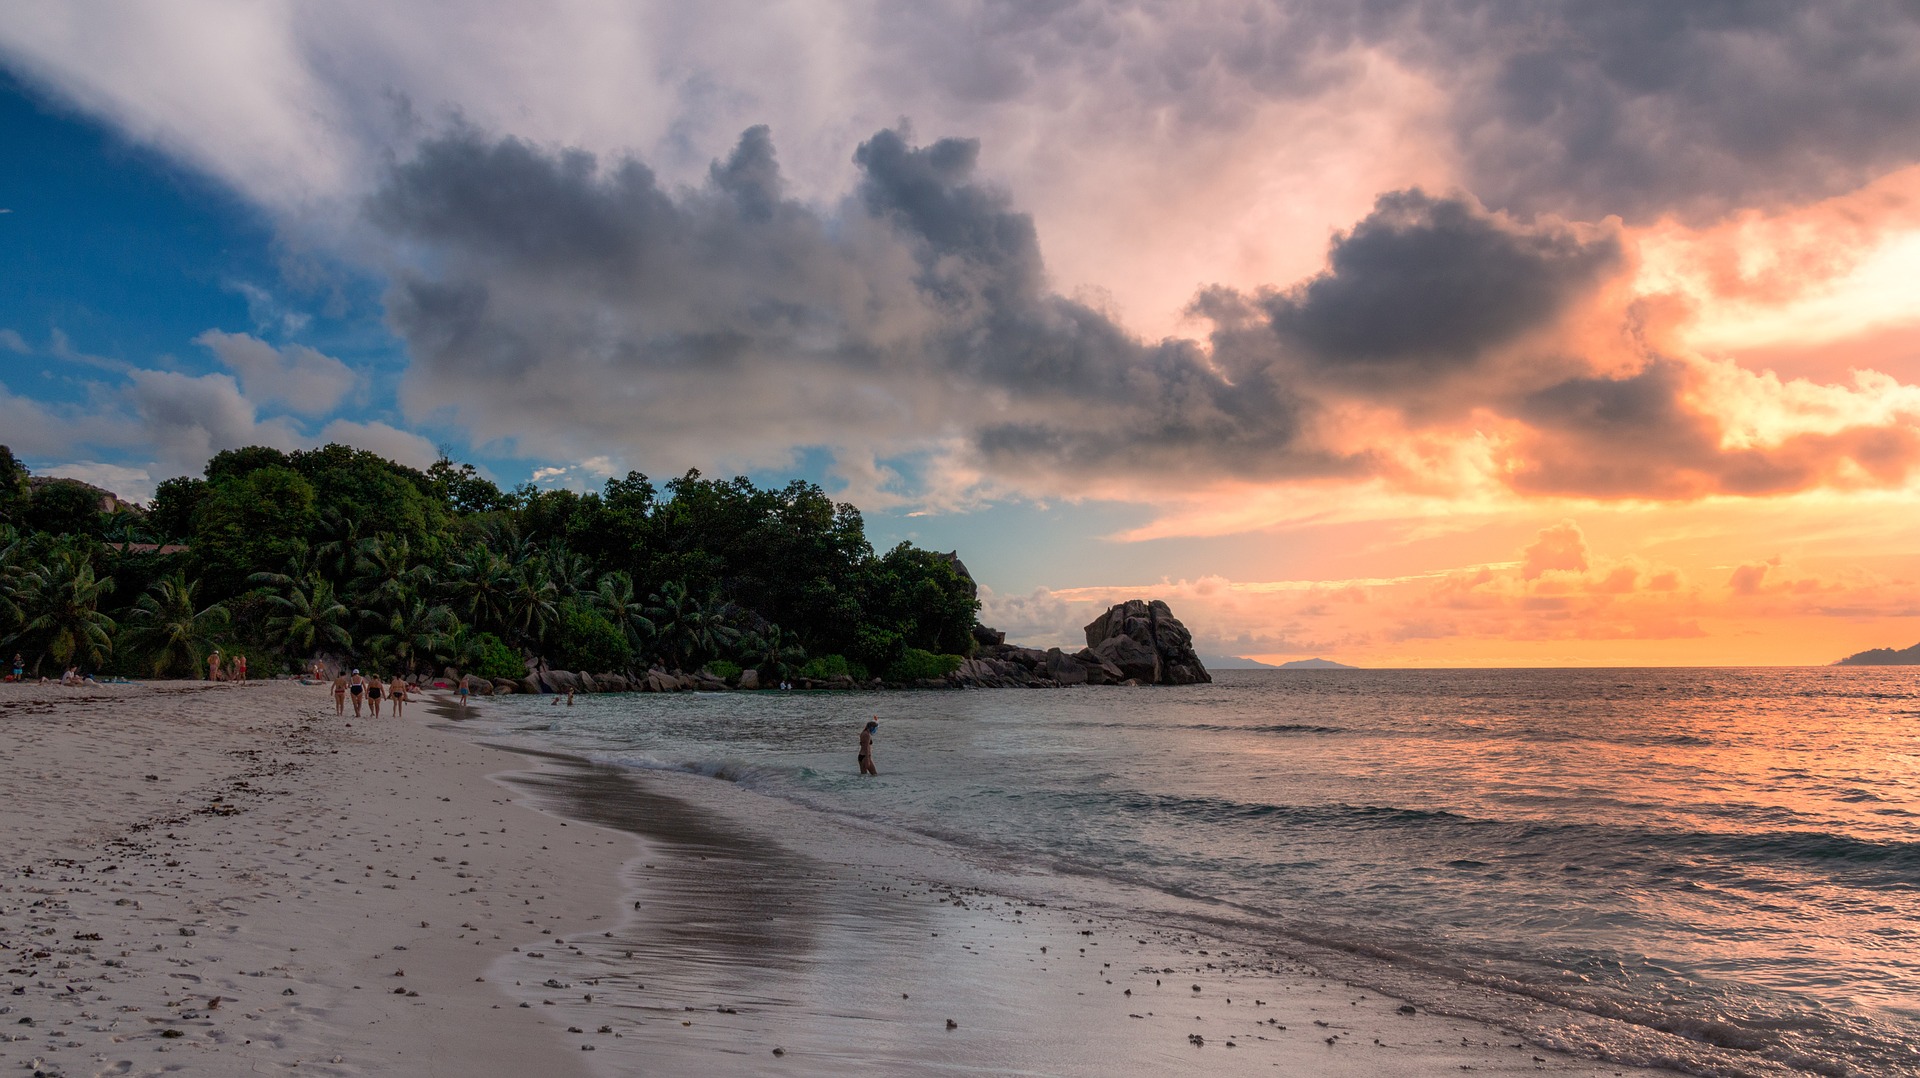 Sunrise over a beach in the Seychelles